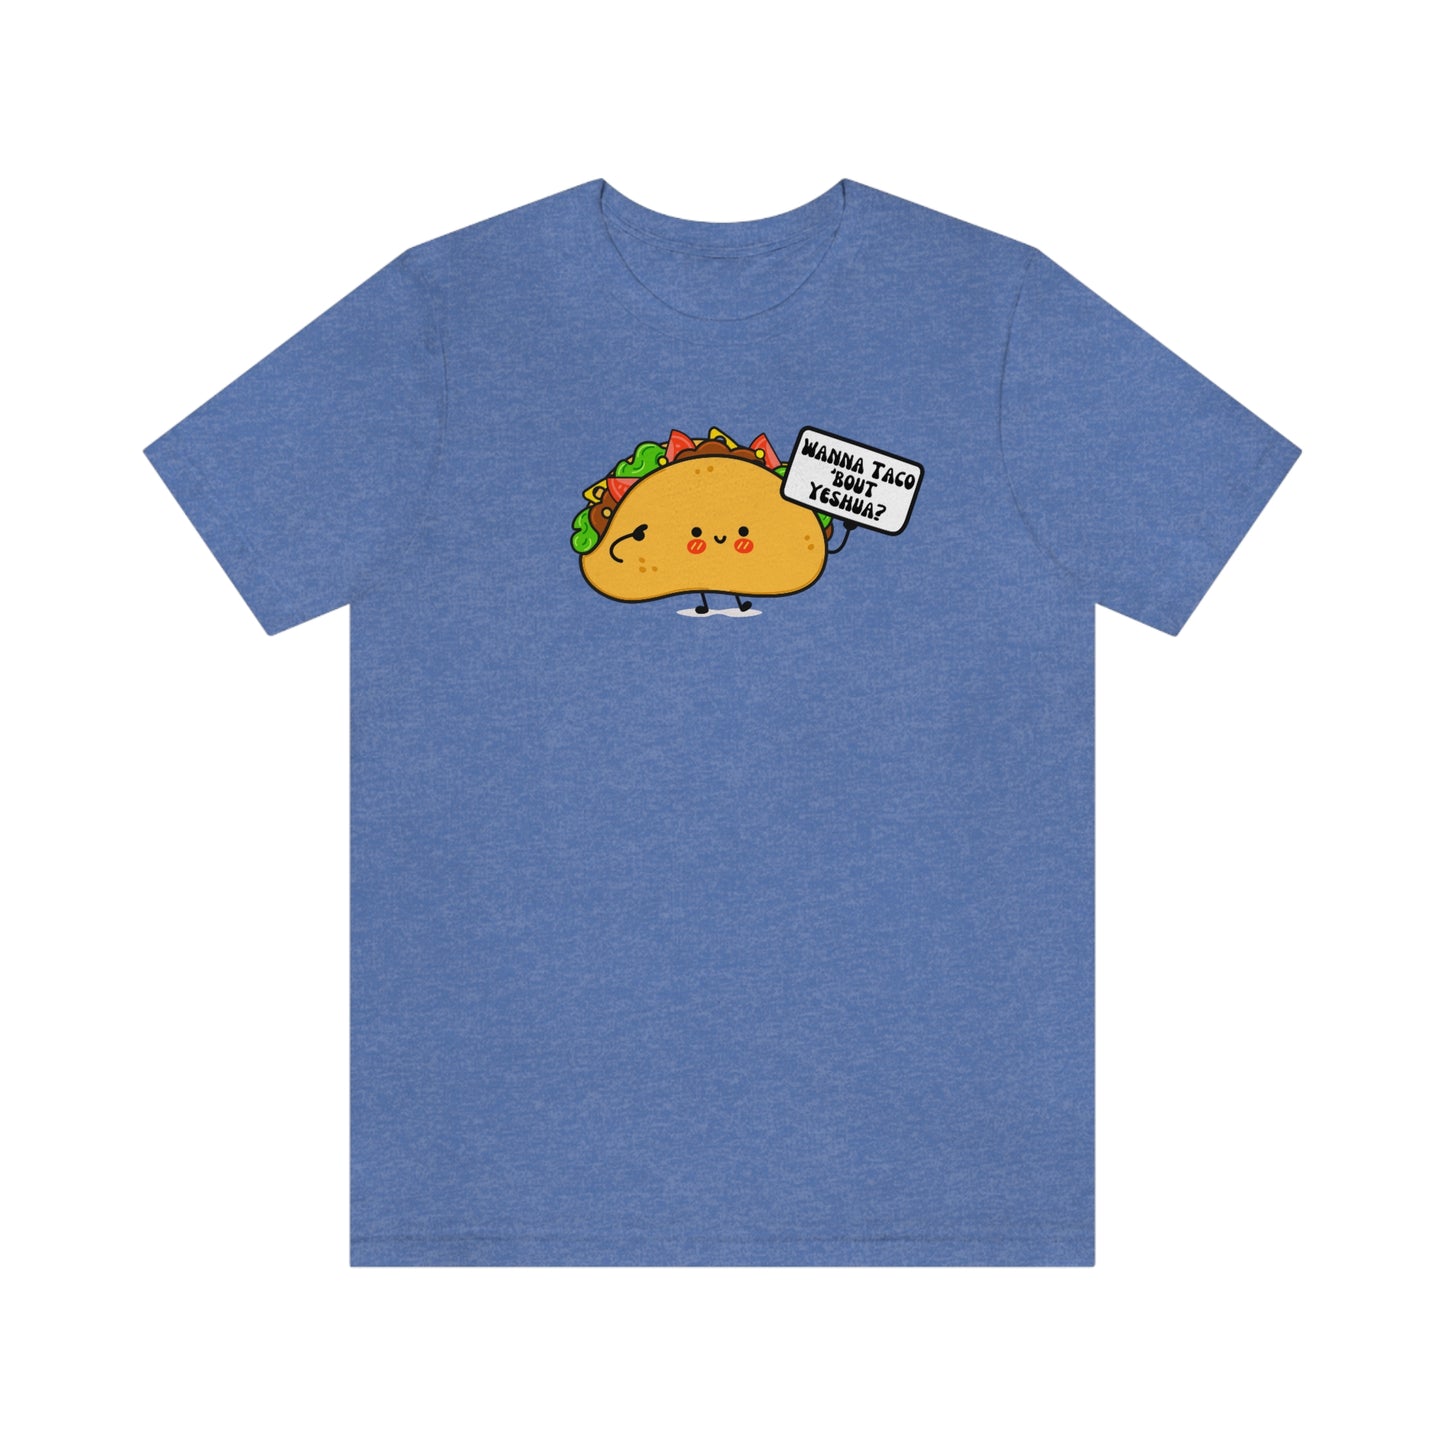 Wanna Taco 'Bout Yeshua Shirt